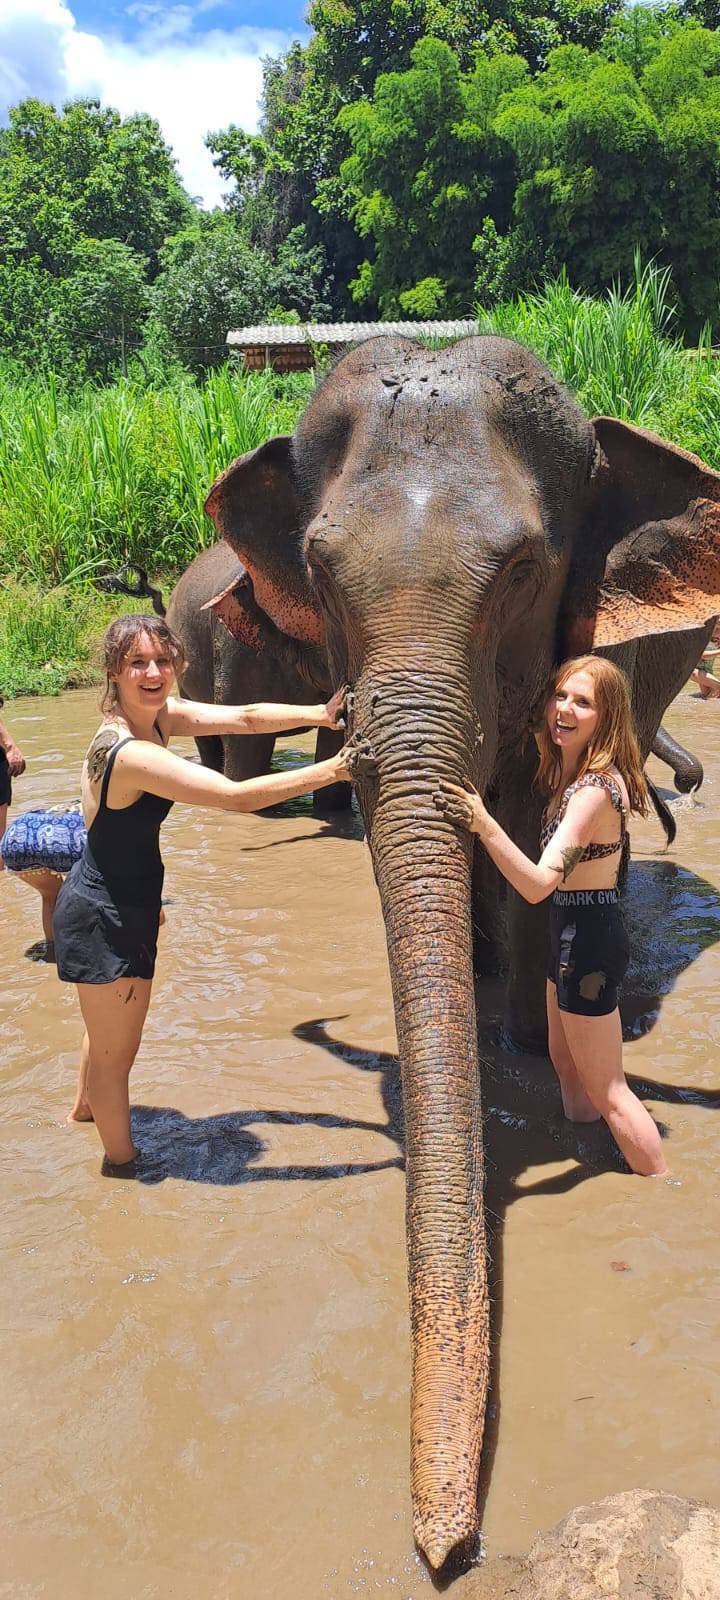 Elephant Chiang Mai Tour